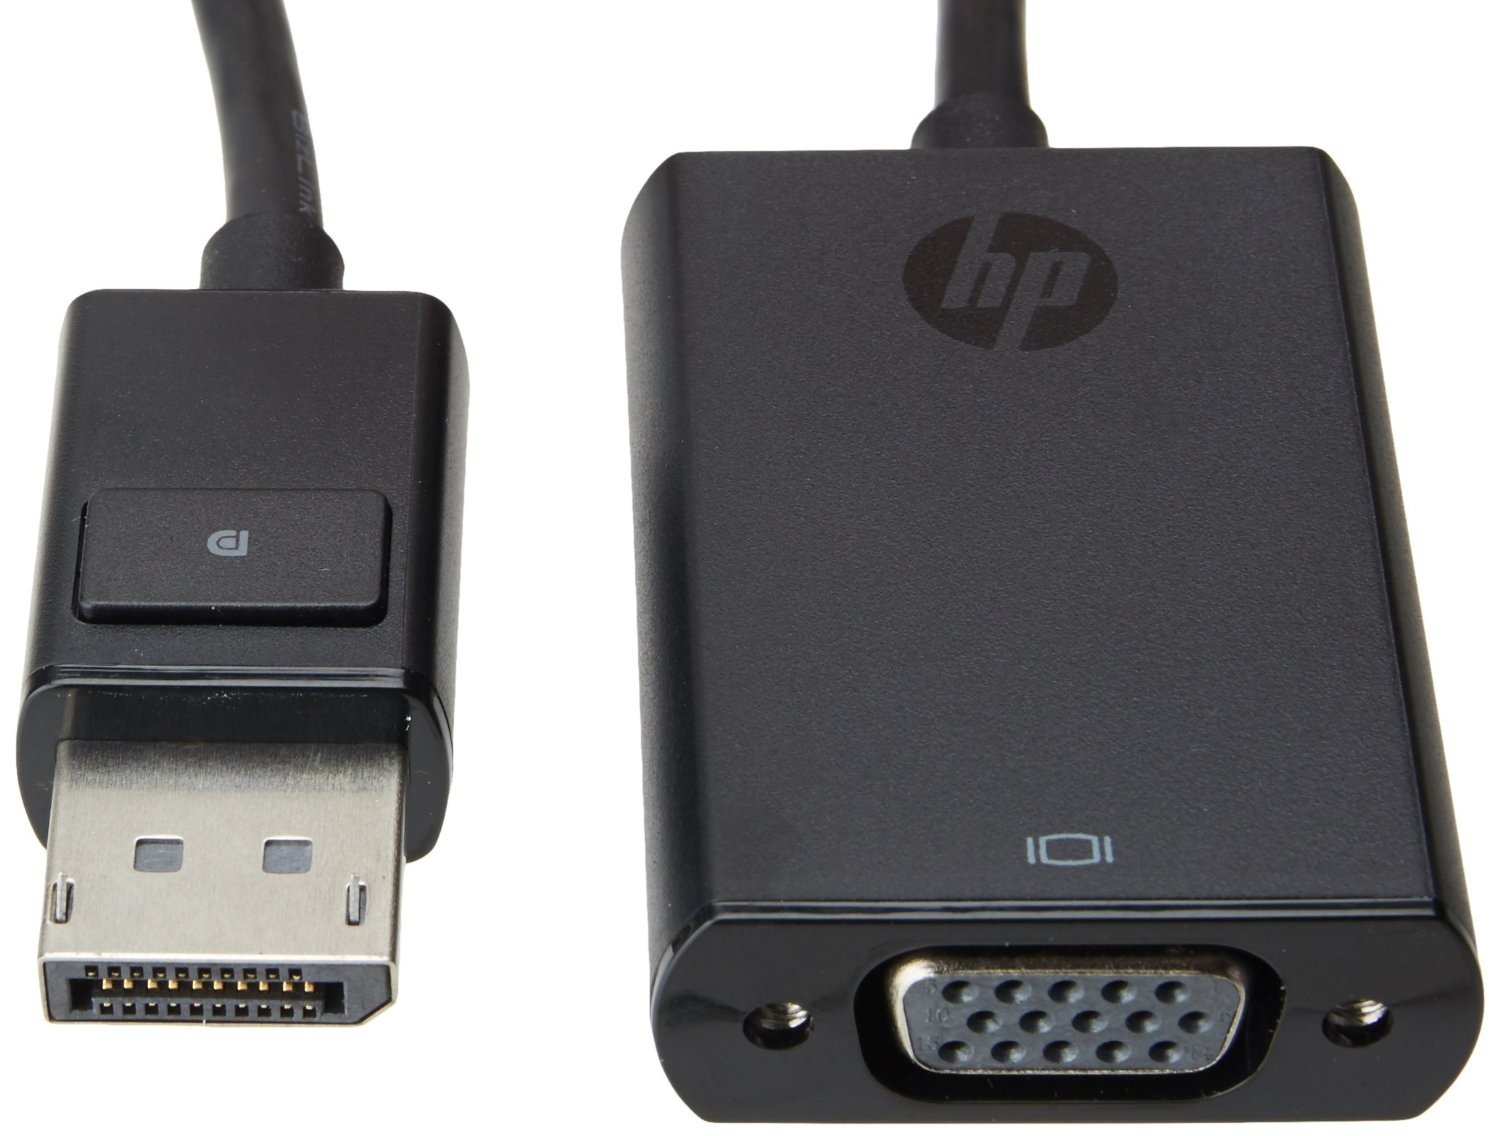 HP DisplayPort To VGA Adapter